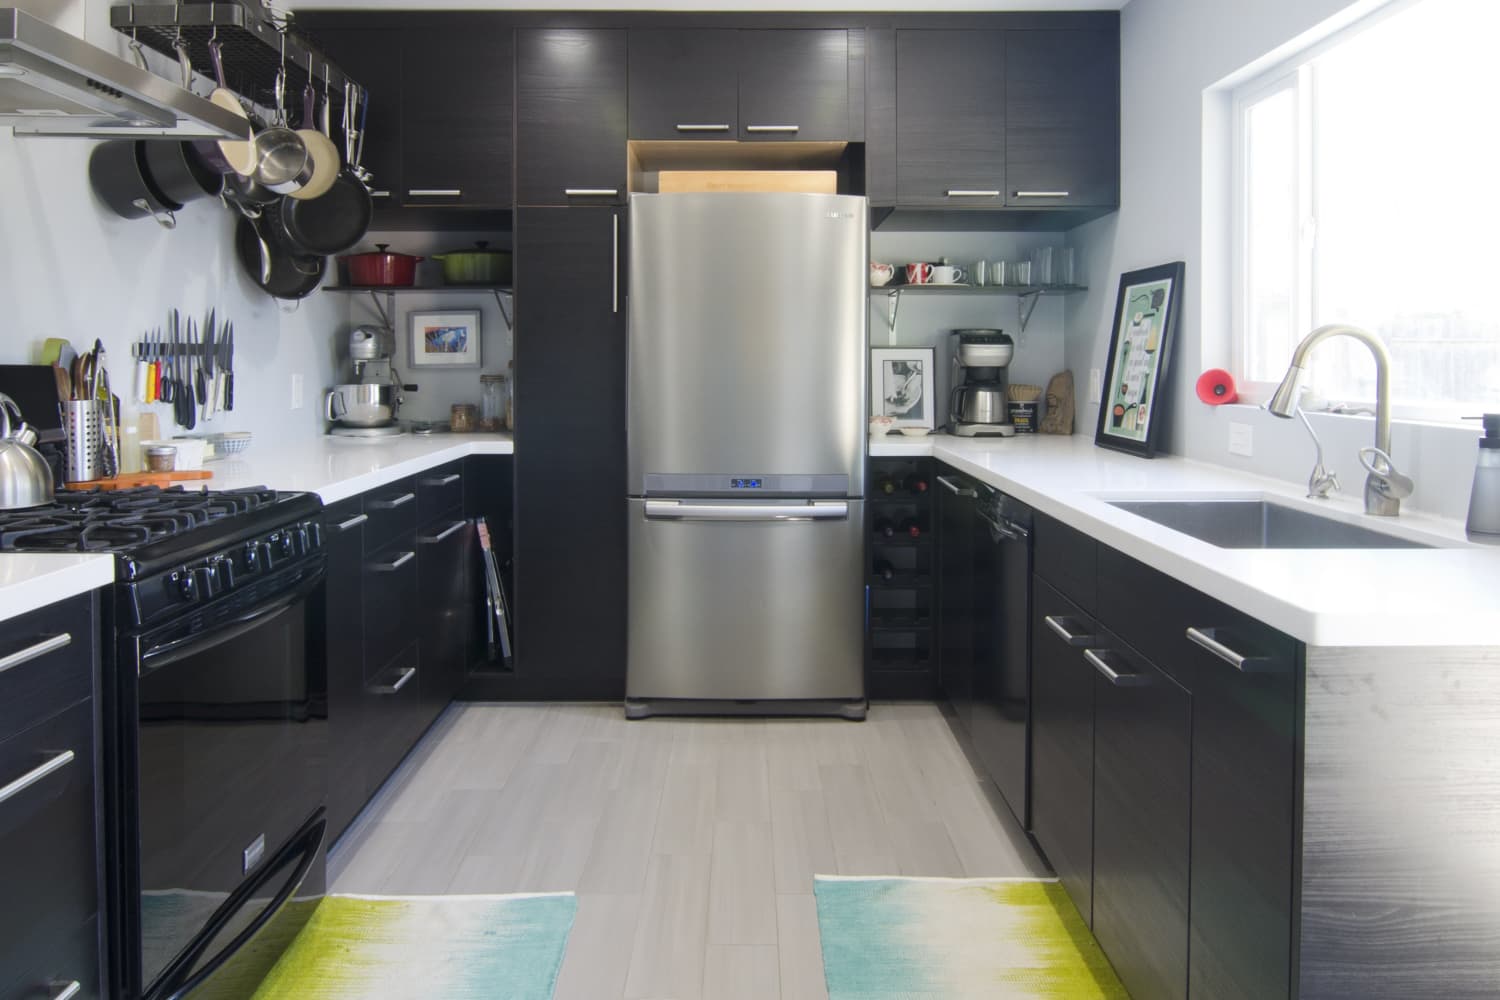 10 Carbon slate kitchen renovation ideas  kitchen renovation, kitchen  remodel, kitchen design